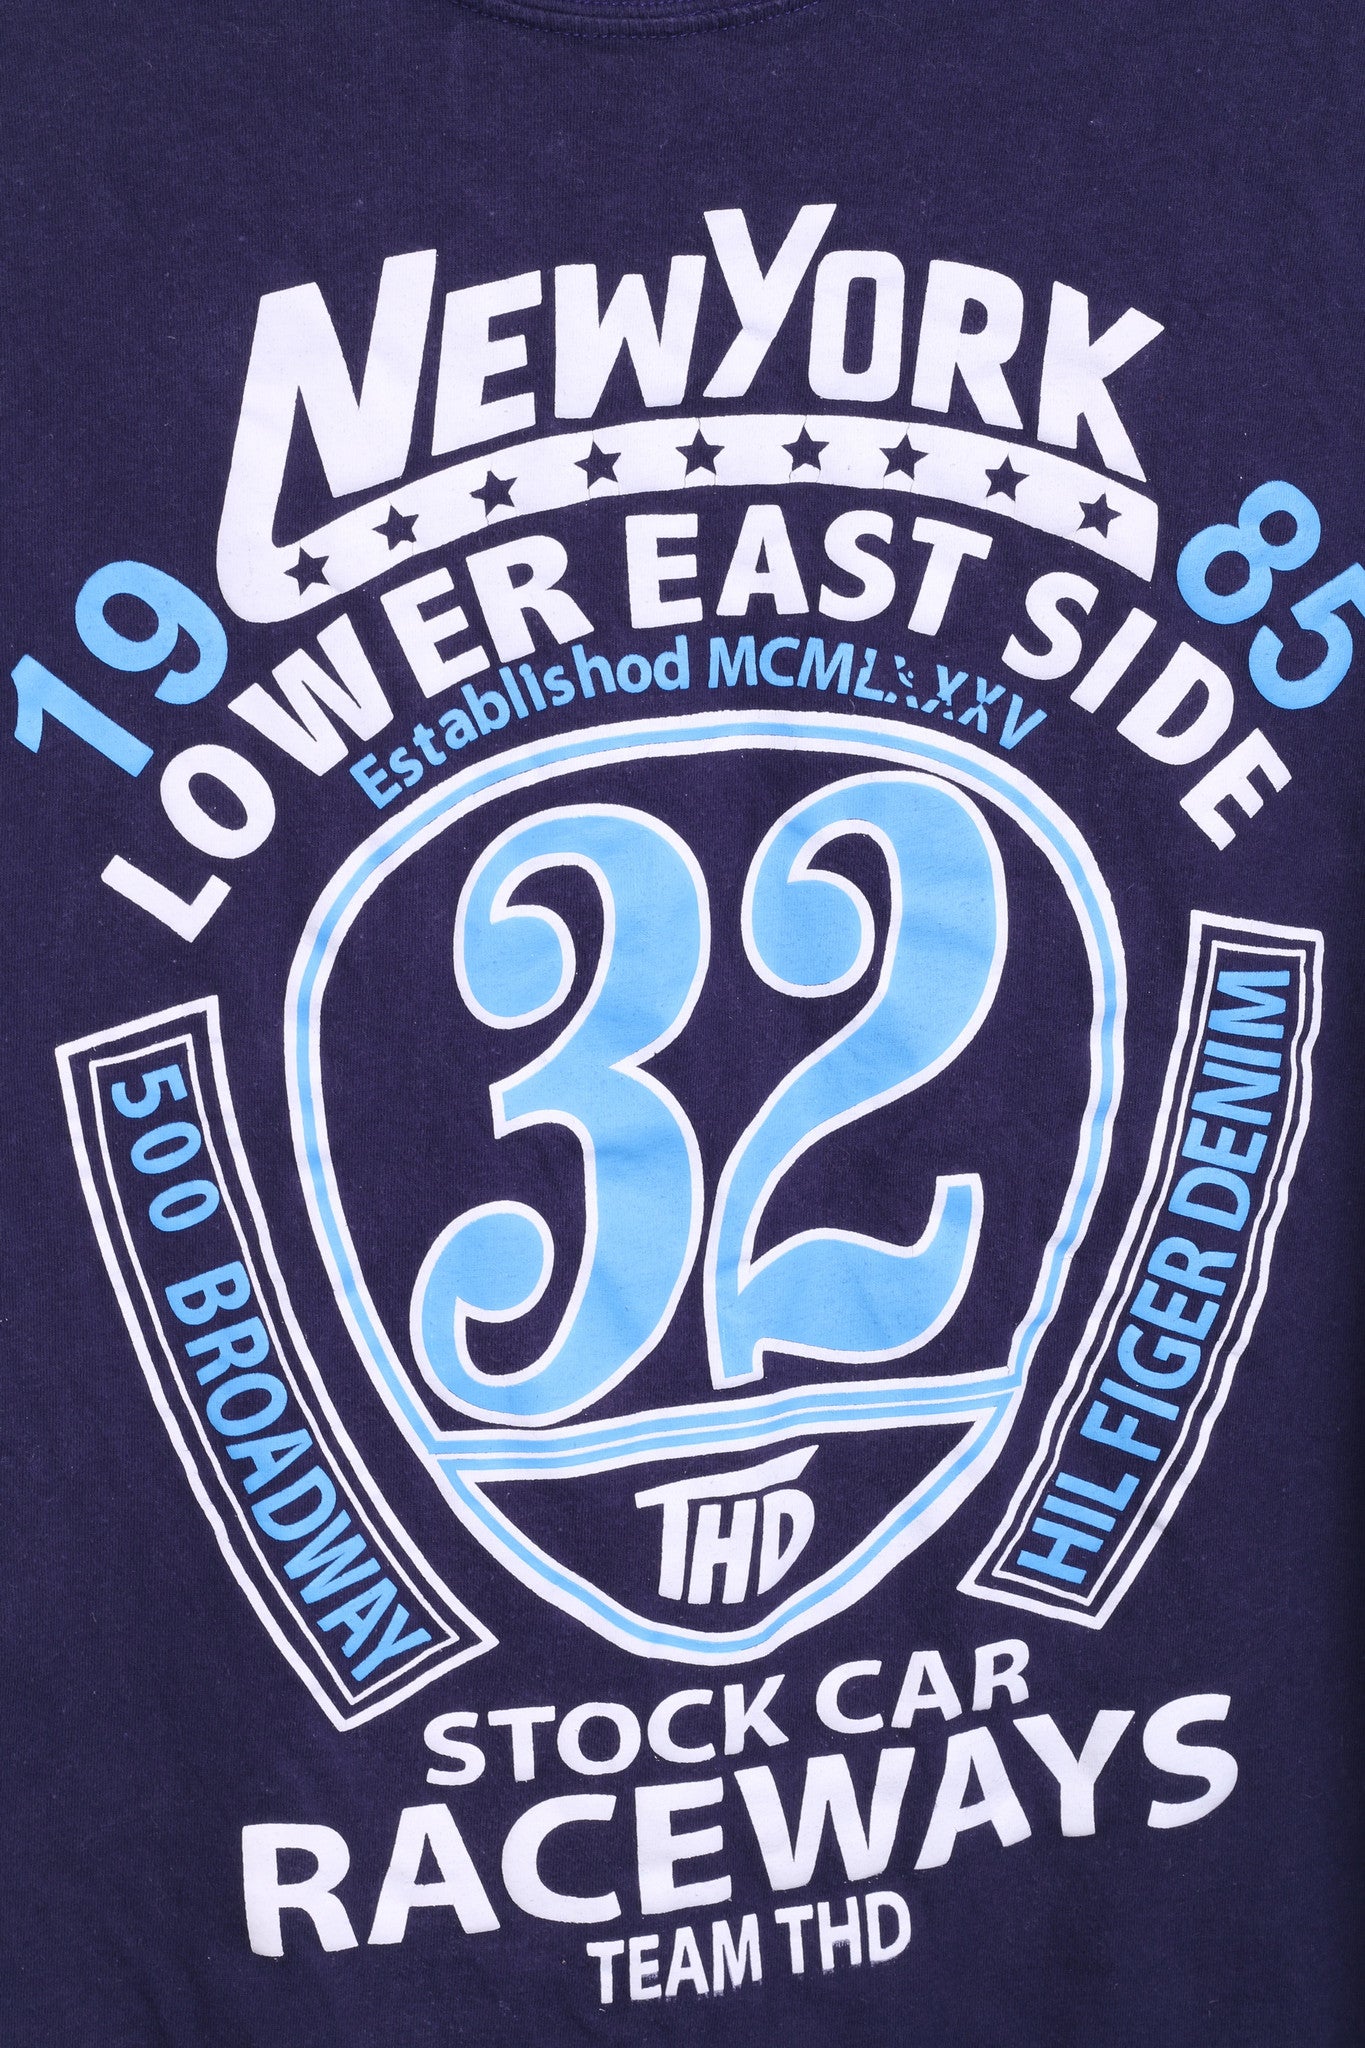 Hilfiger Denim Womens L Shirt Crew Neck Navy Cotton Raceways New York - RetrospectClothes